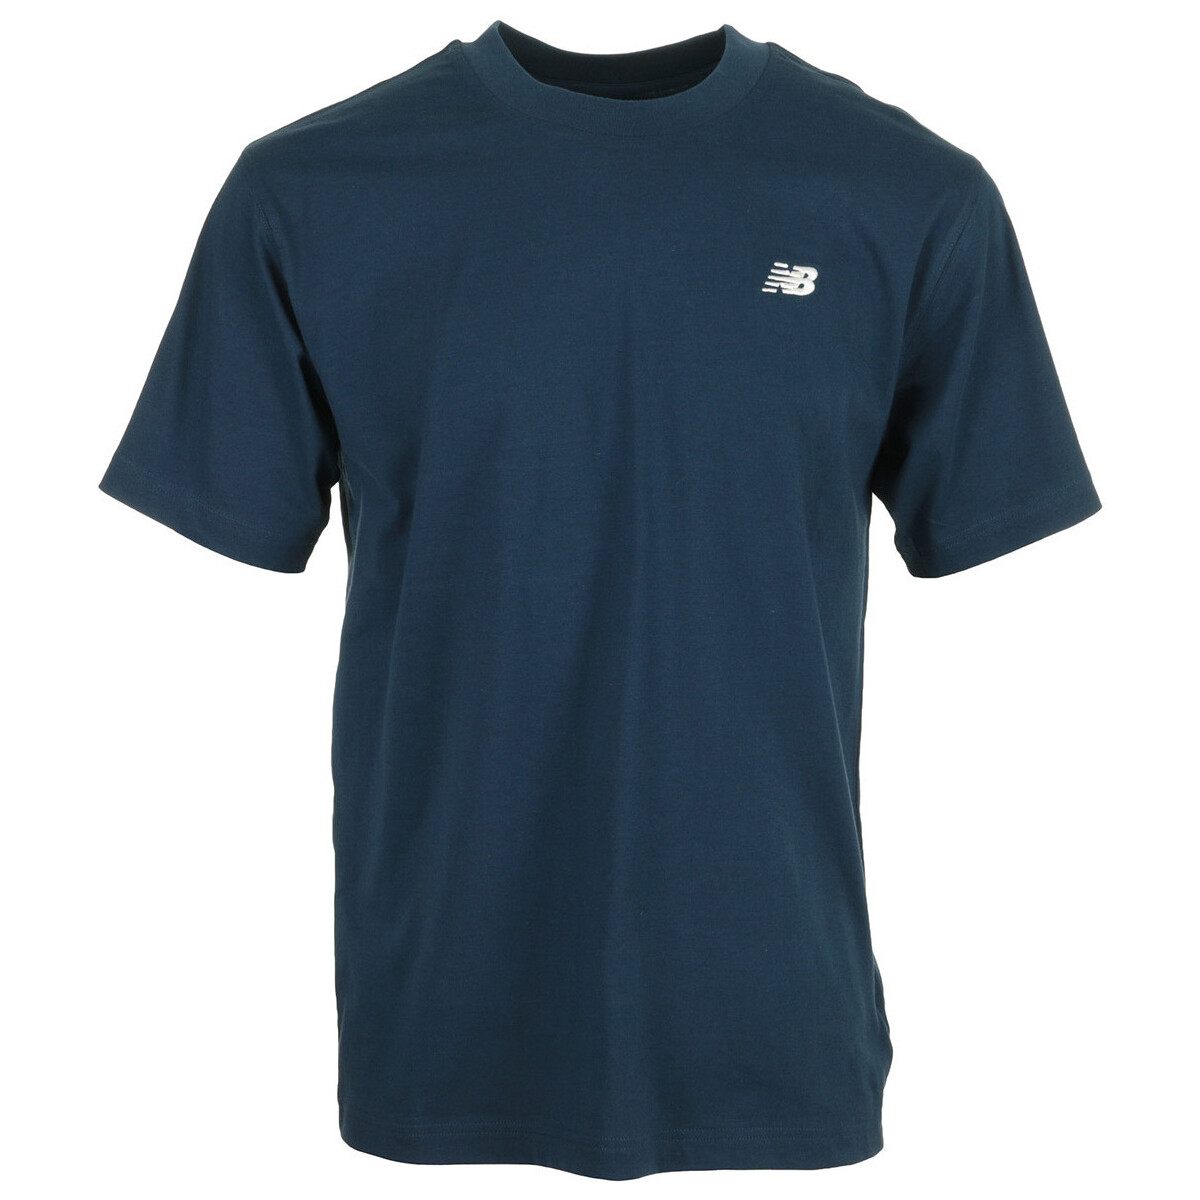 Kleidung Herren T-Shirts New Balance Se Ctn Ss Blau